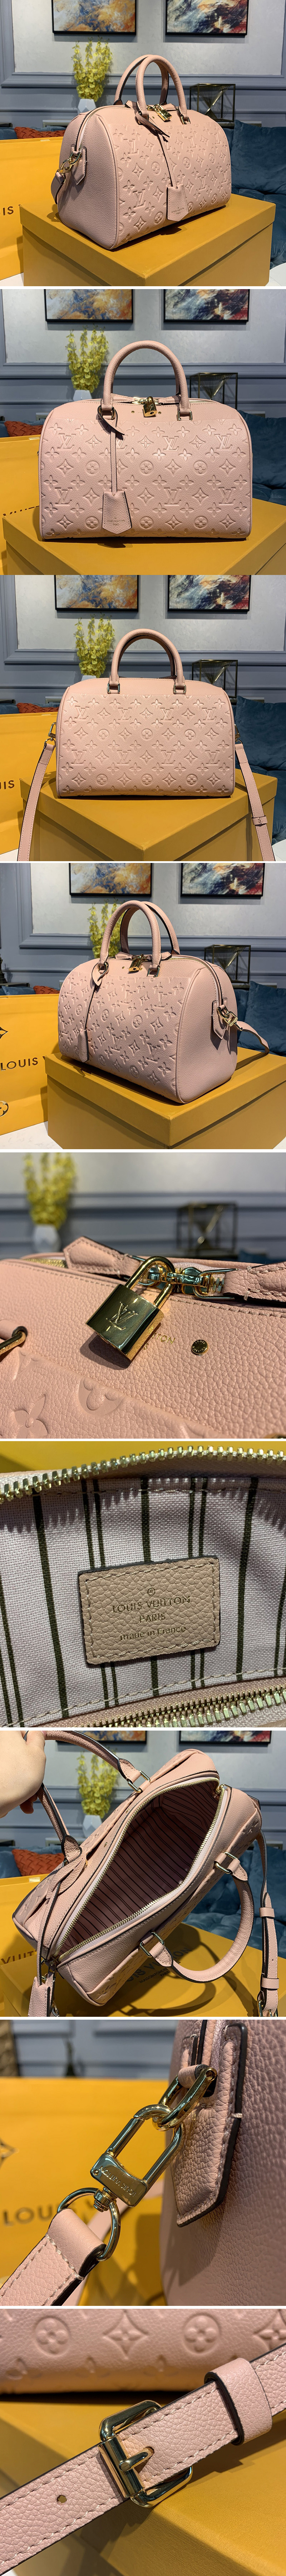 Replica Louis Vuitton M42406 Speedy Bandouliere 30 handbag in Pink Monogram Empreinte leather